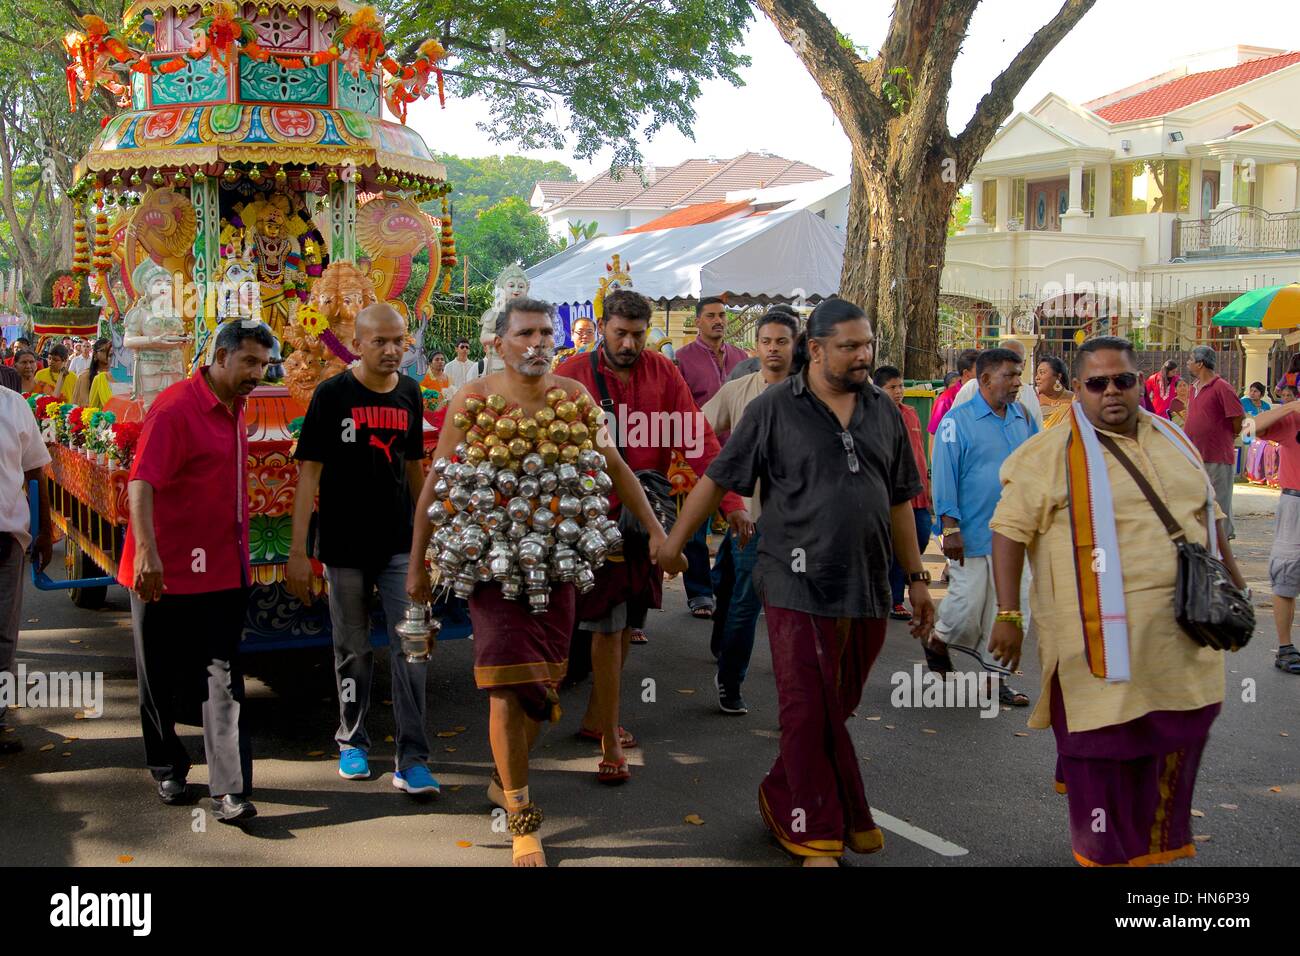 Thaipusam celebration in Penang. Devotees performing kavadi attam towards Lord Murugan, God of War in Hinduism. Stock Photo